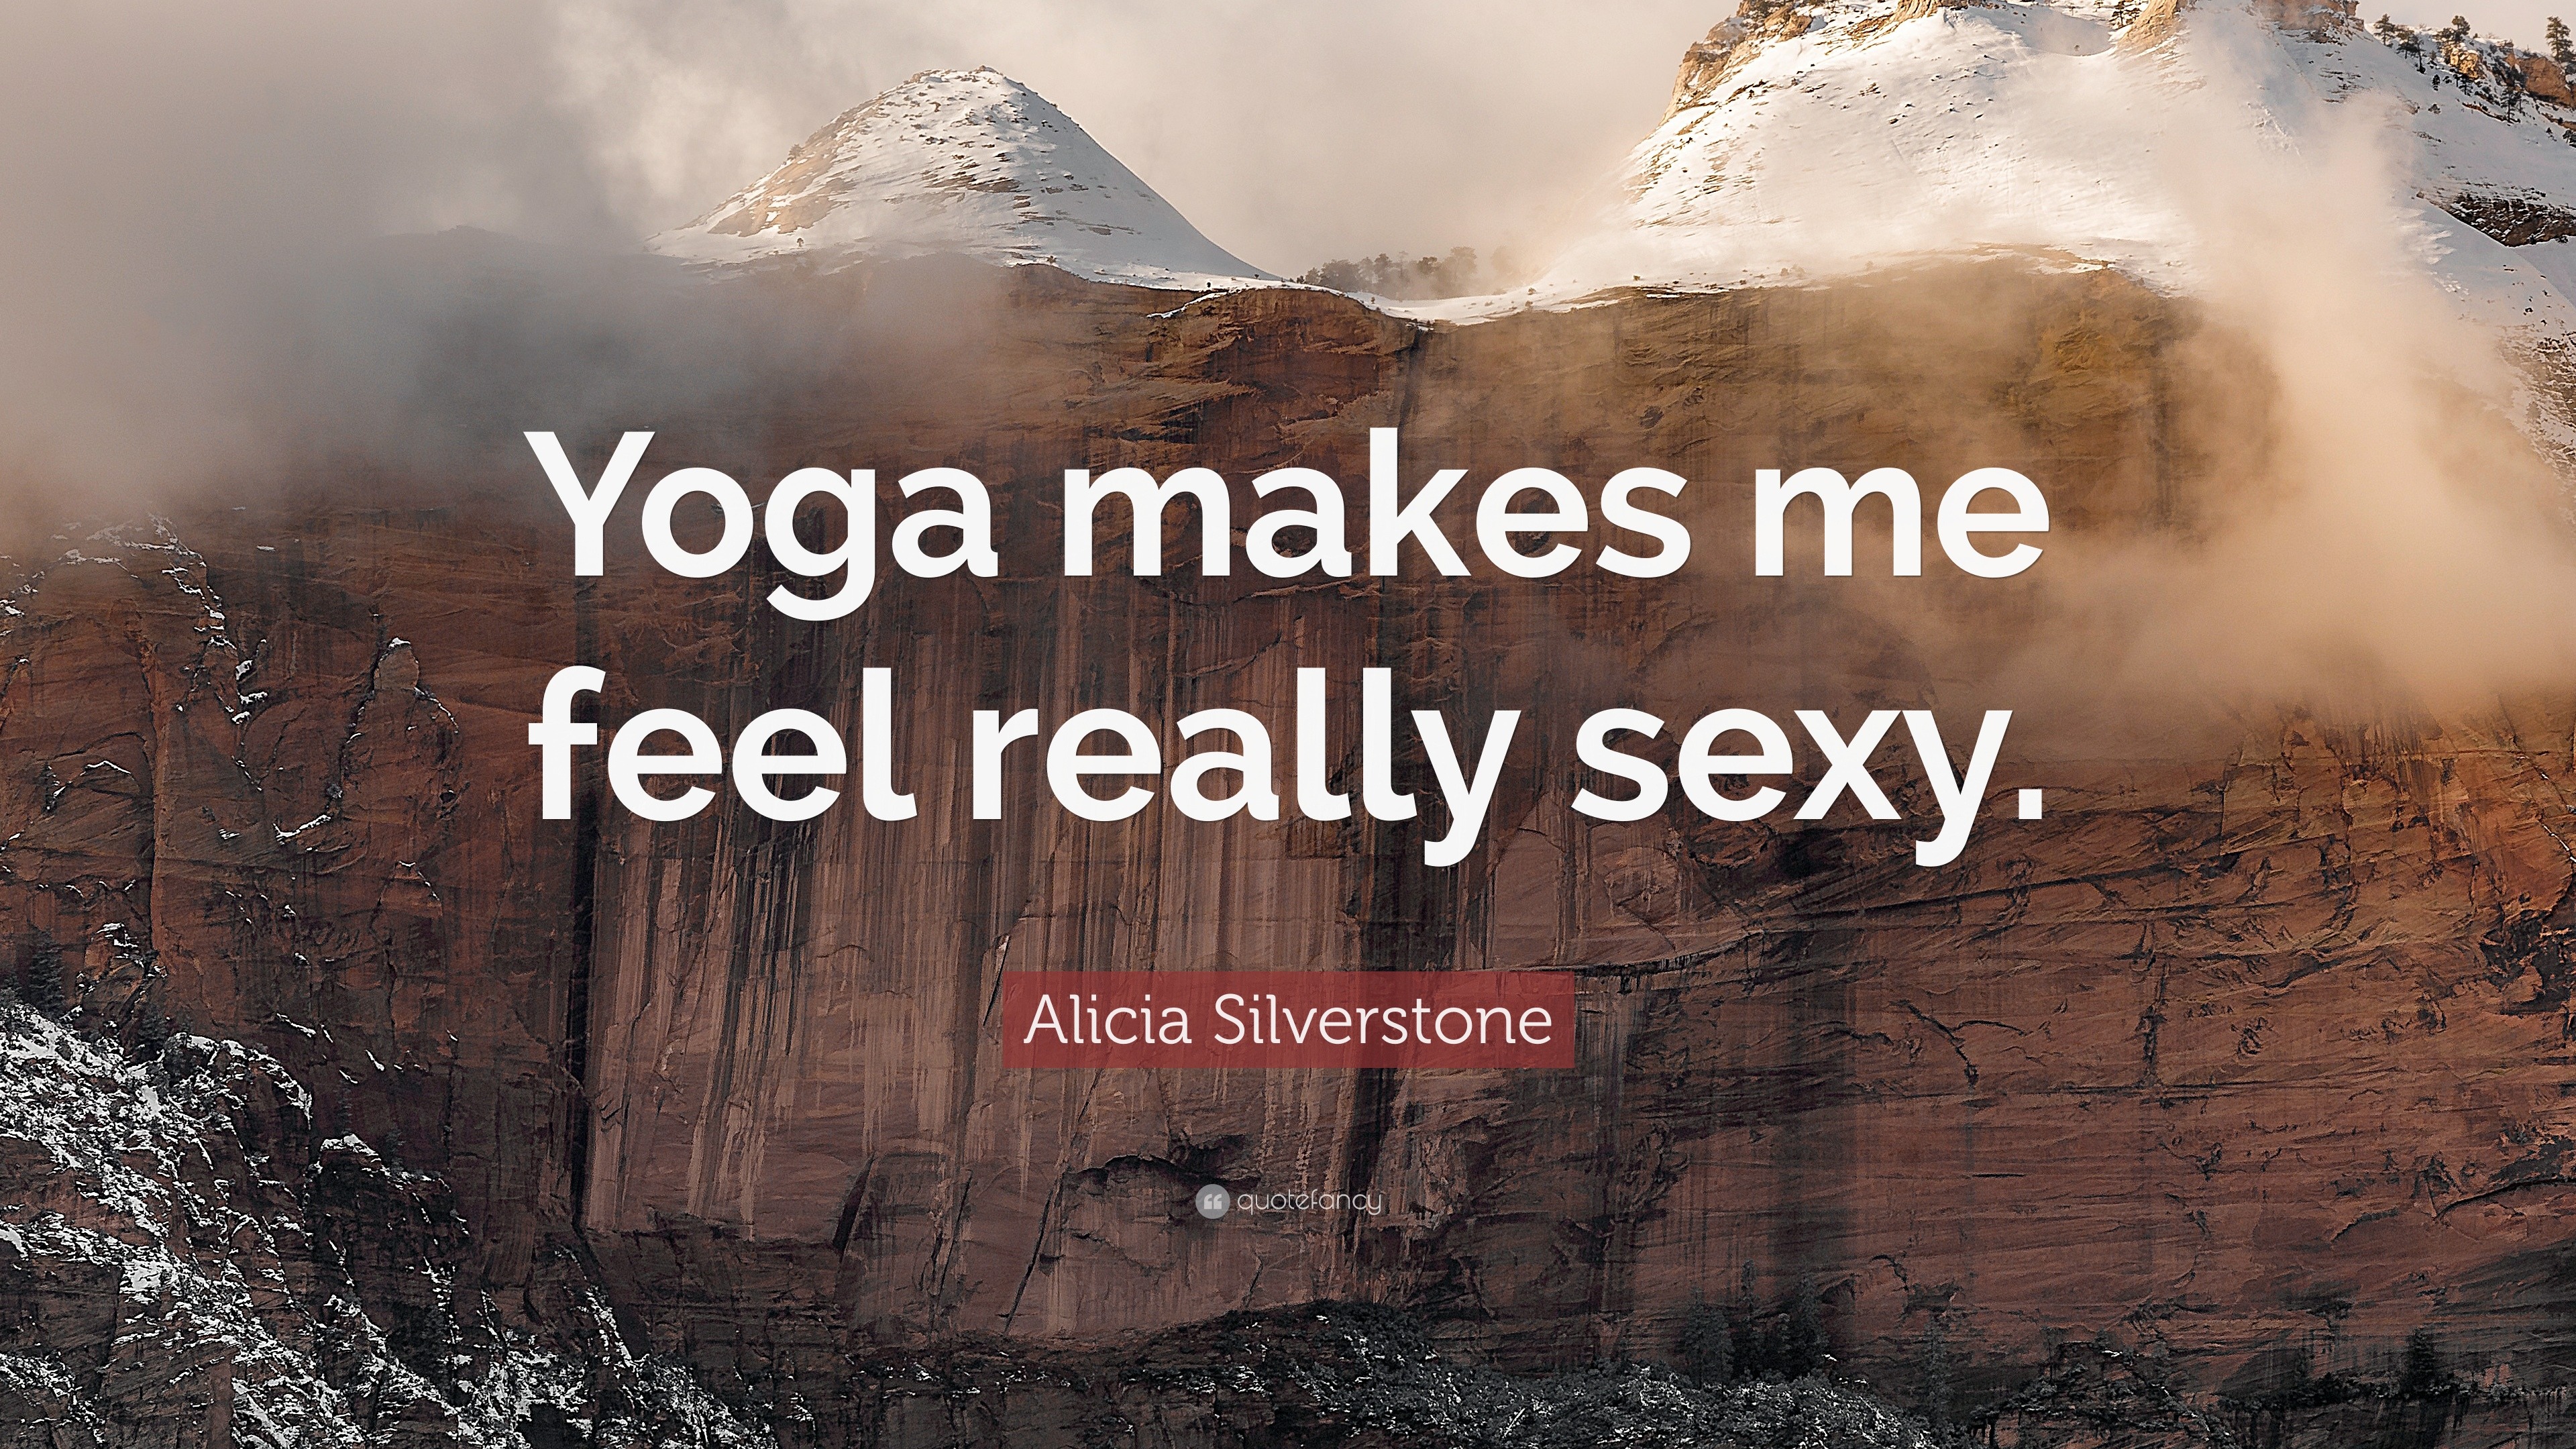 Alicia Silverstone Quote Yoga Makes Me Feel Really Sexy”